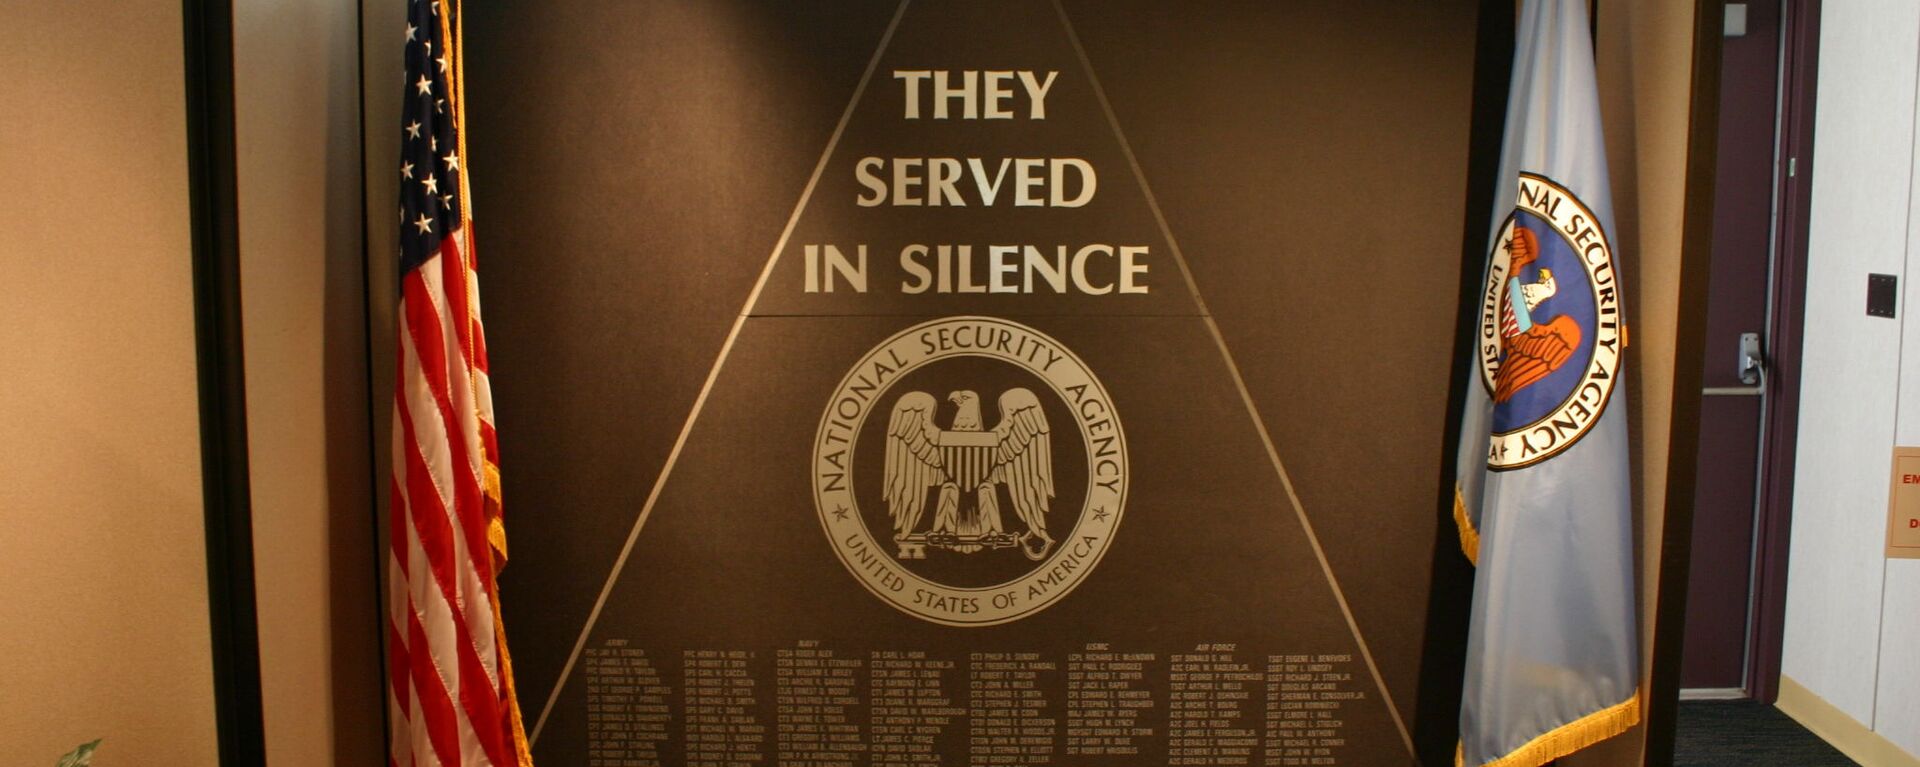 National Security Agency - They Served in Silence - Sputnik International, 1920, 31.05.2021